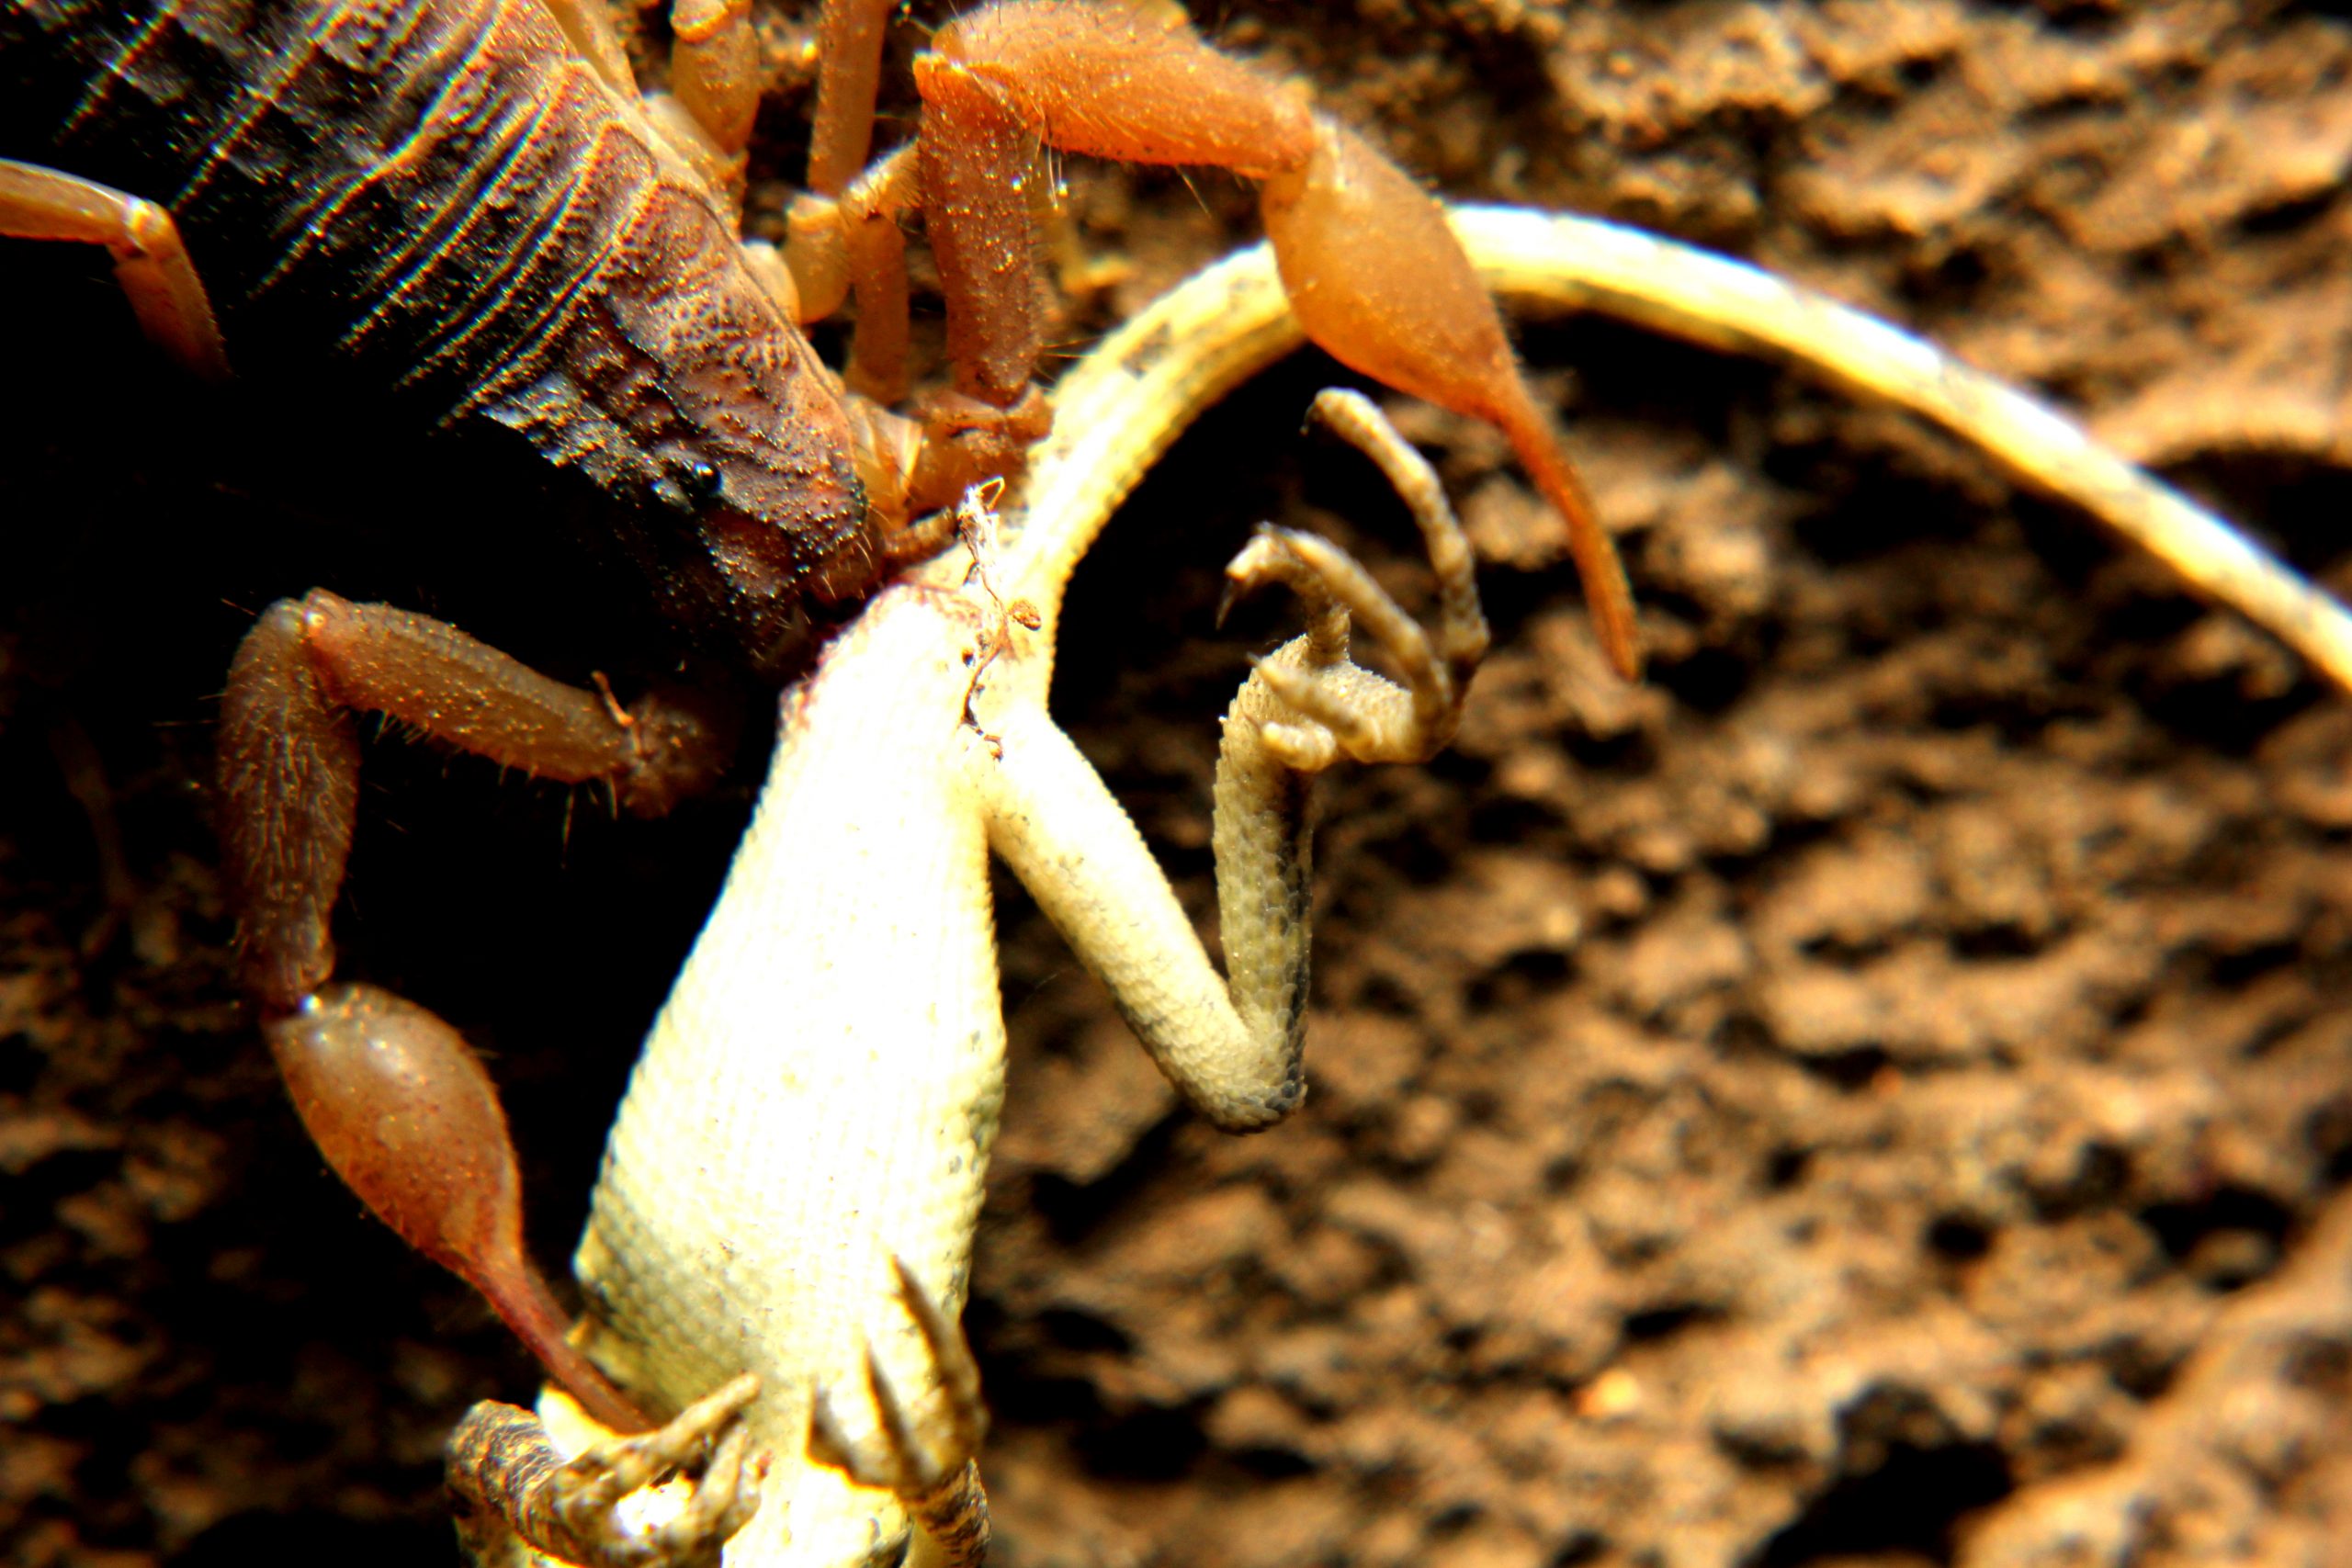 A scorpion killed a lizard